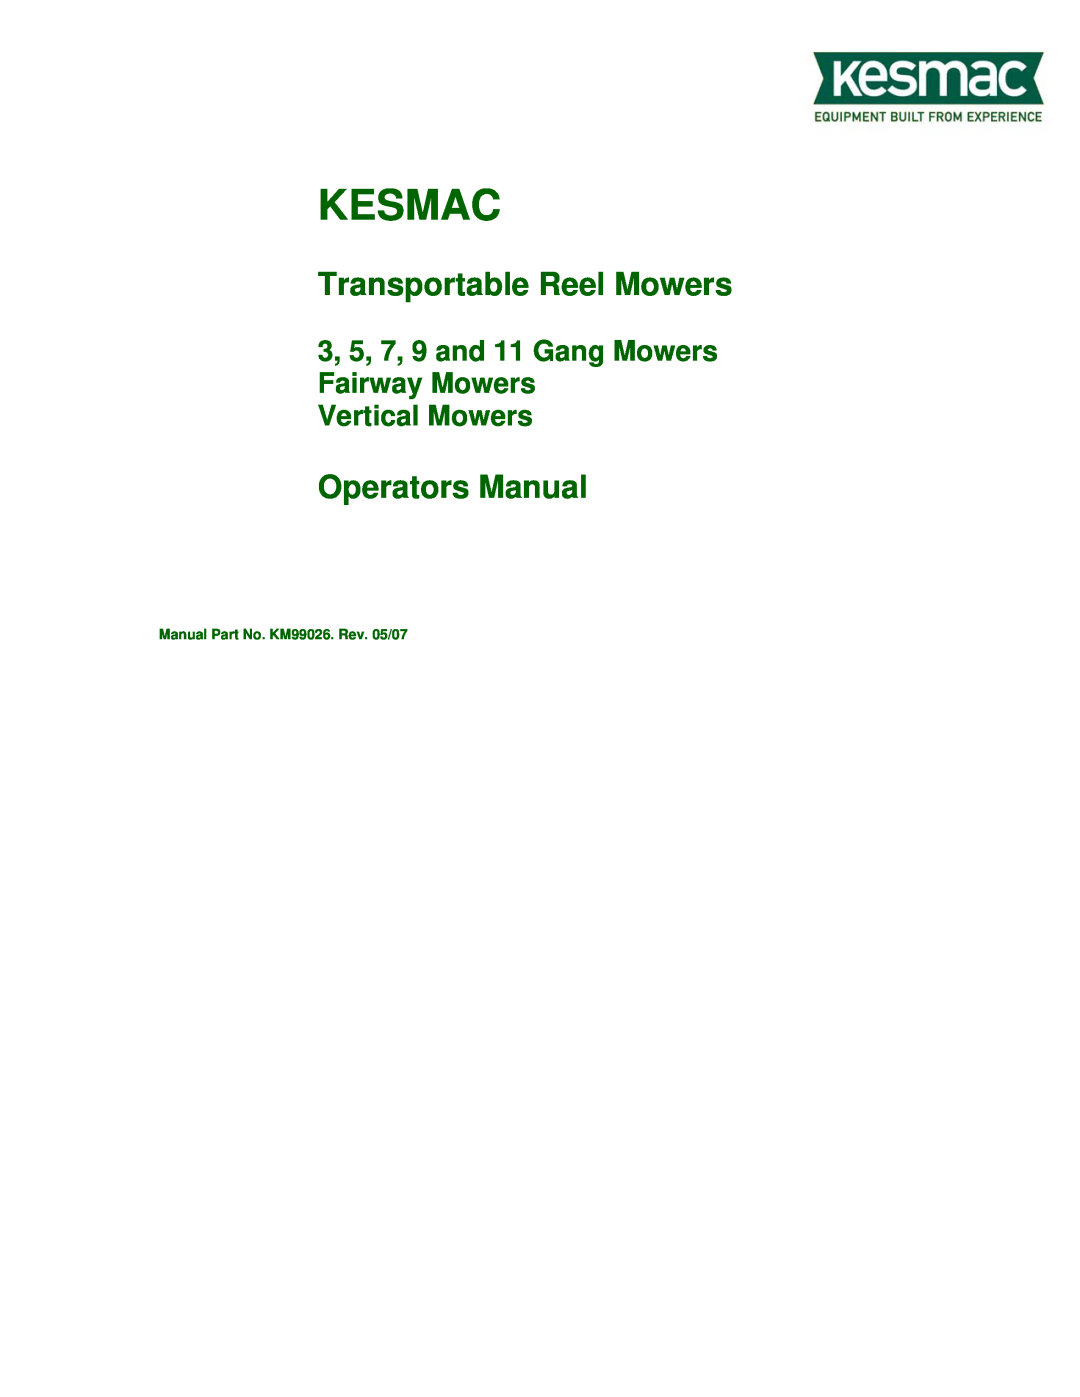 Kenmore 613, 11 owner manual OwnersManual ManualDel Propietario VacuumCleaner, Aspiradora, Cuidado, Read and follow all 